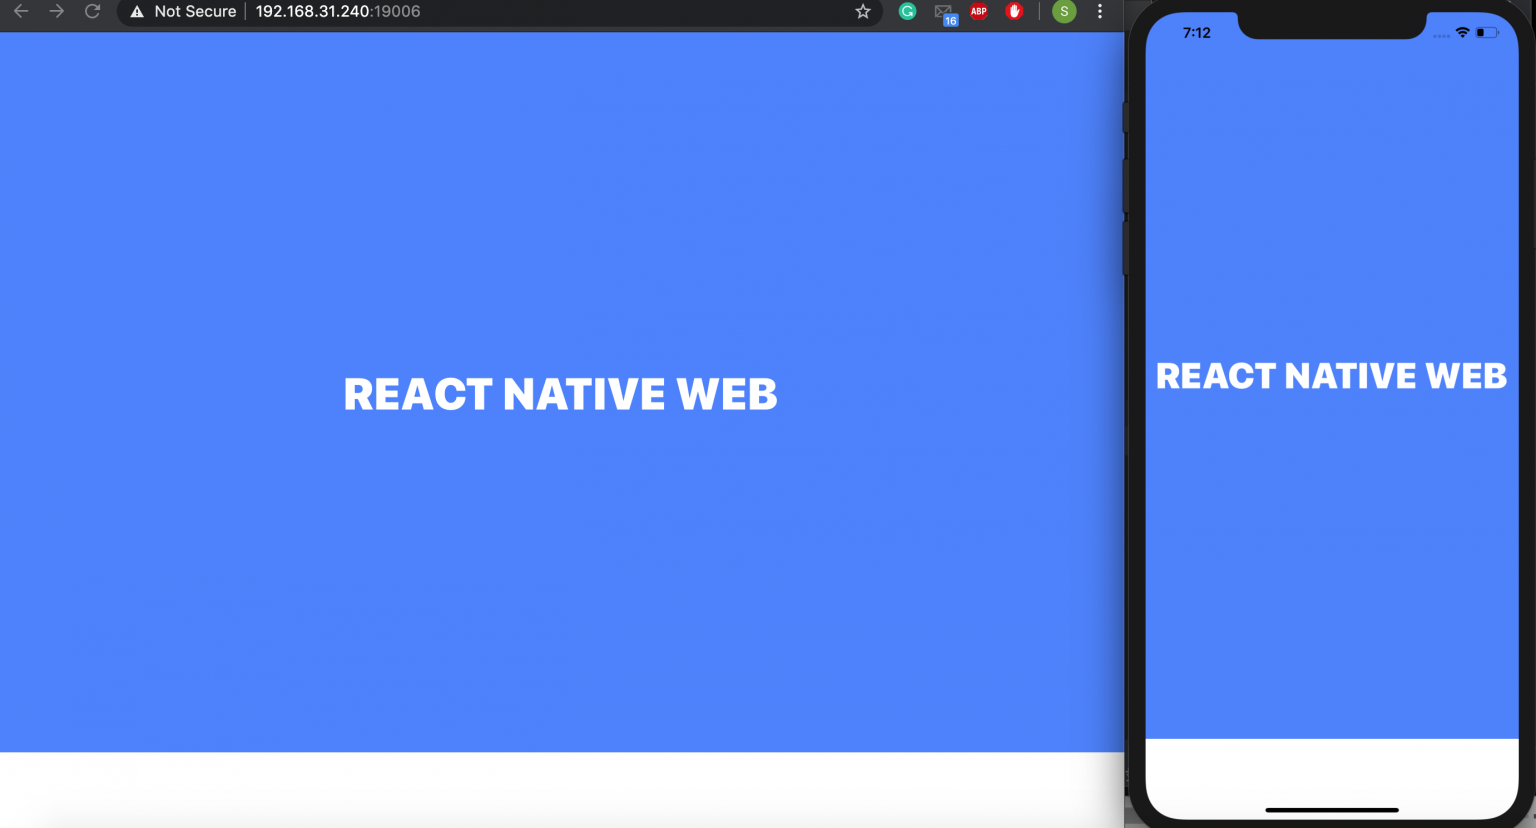 React native web